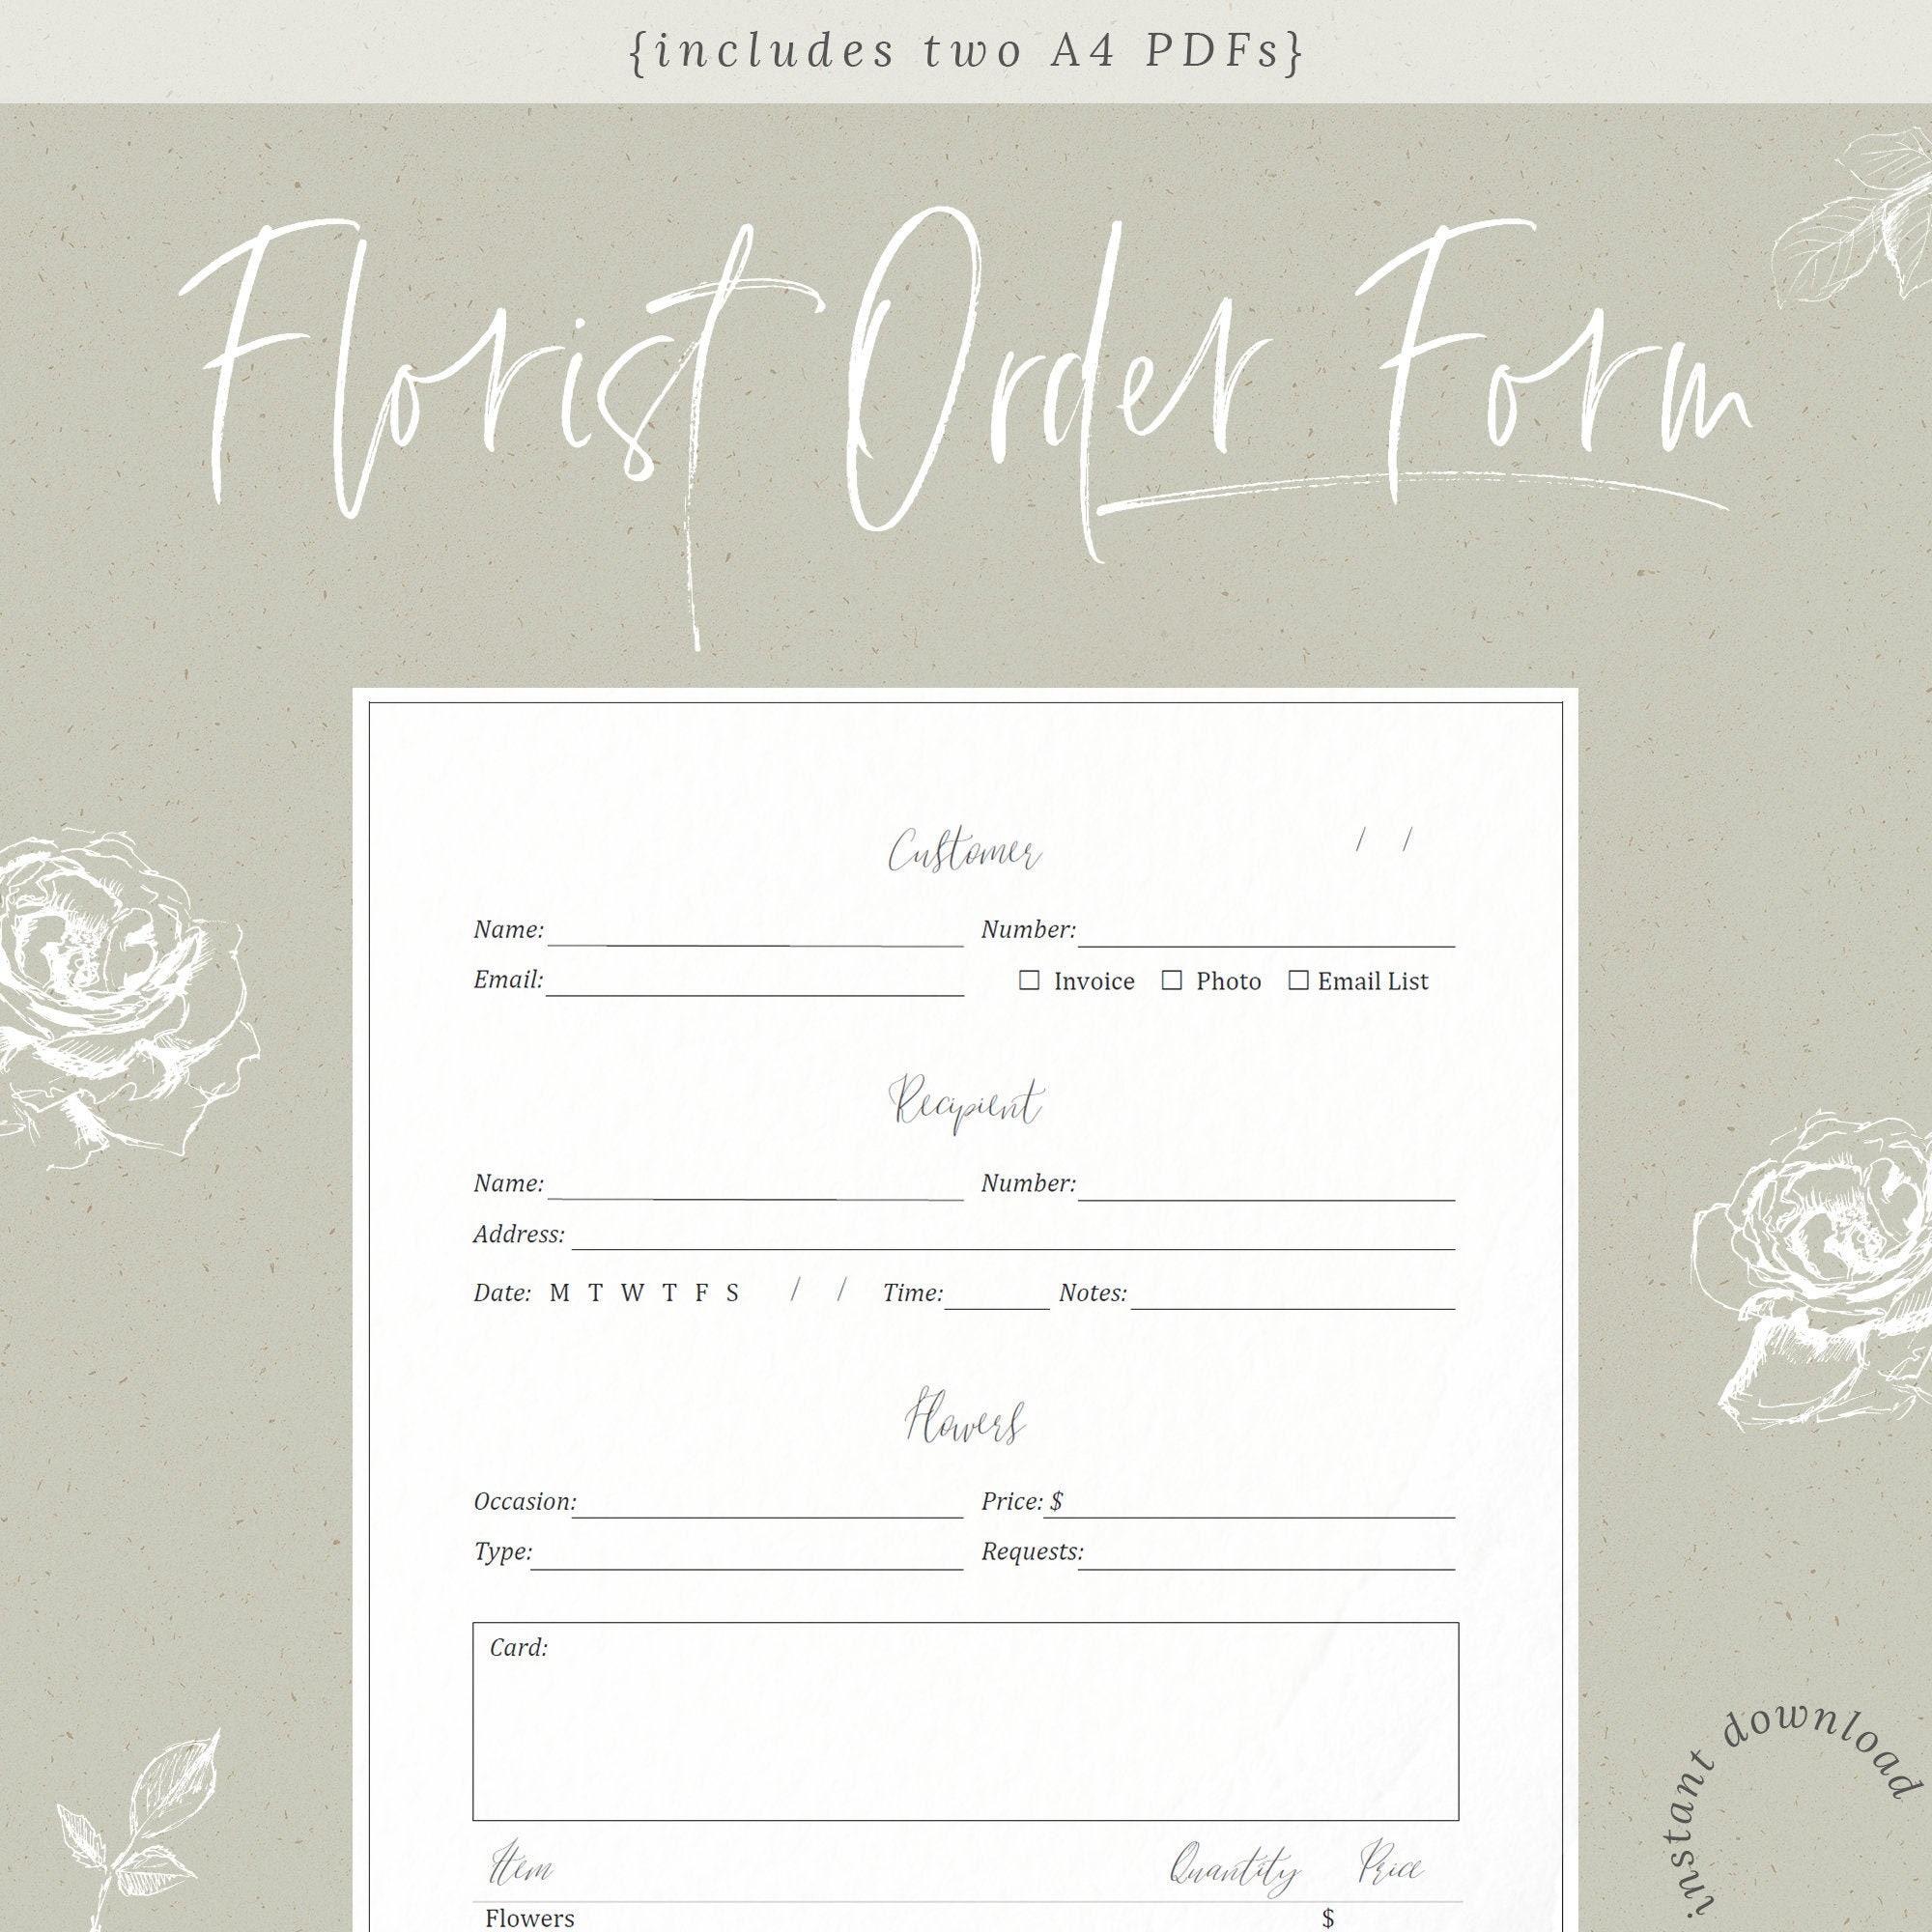 florist-order-form-template-free